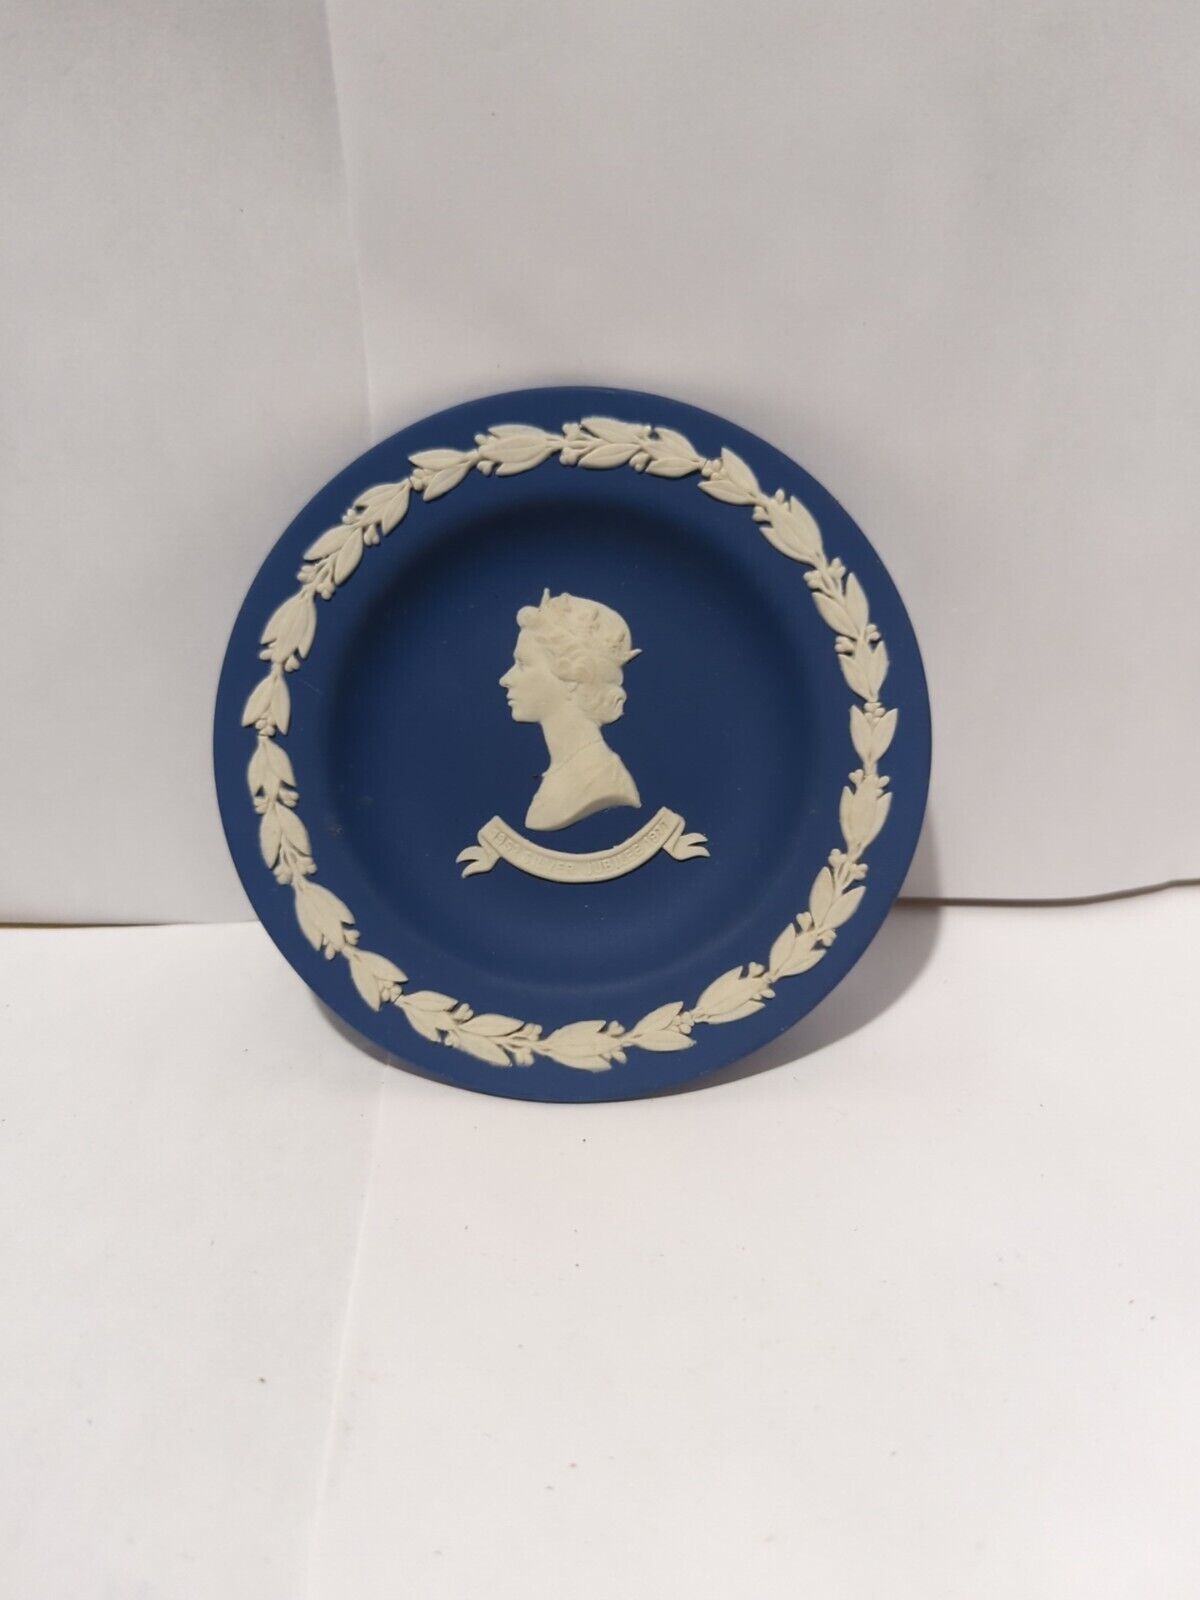 Wedgwood Jasperware portland blue trinket dish 1977 Queen Elizabeth II Jubilee